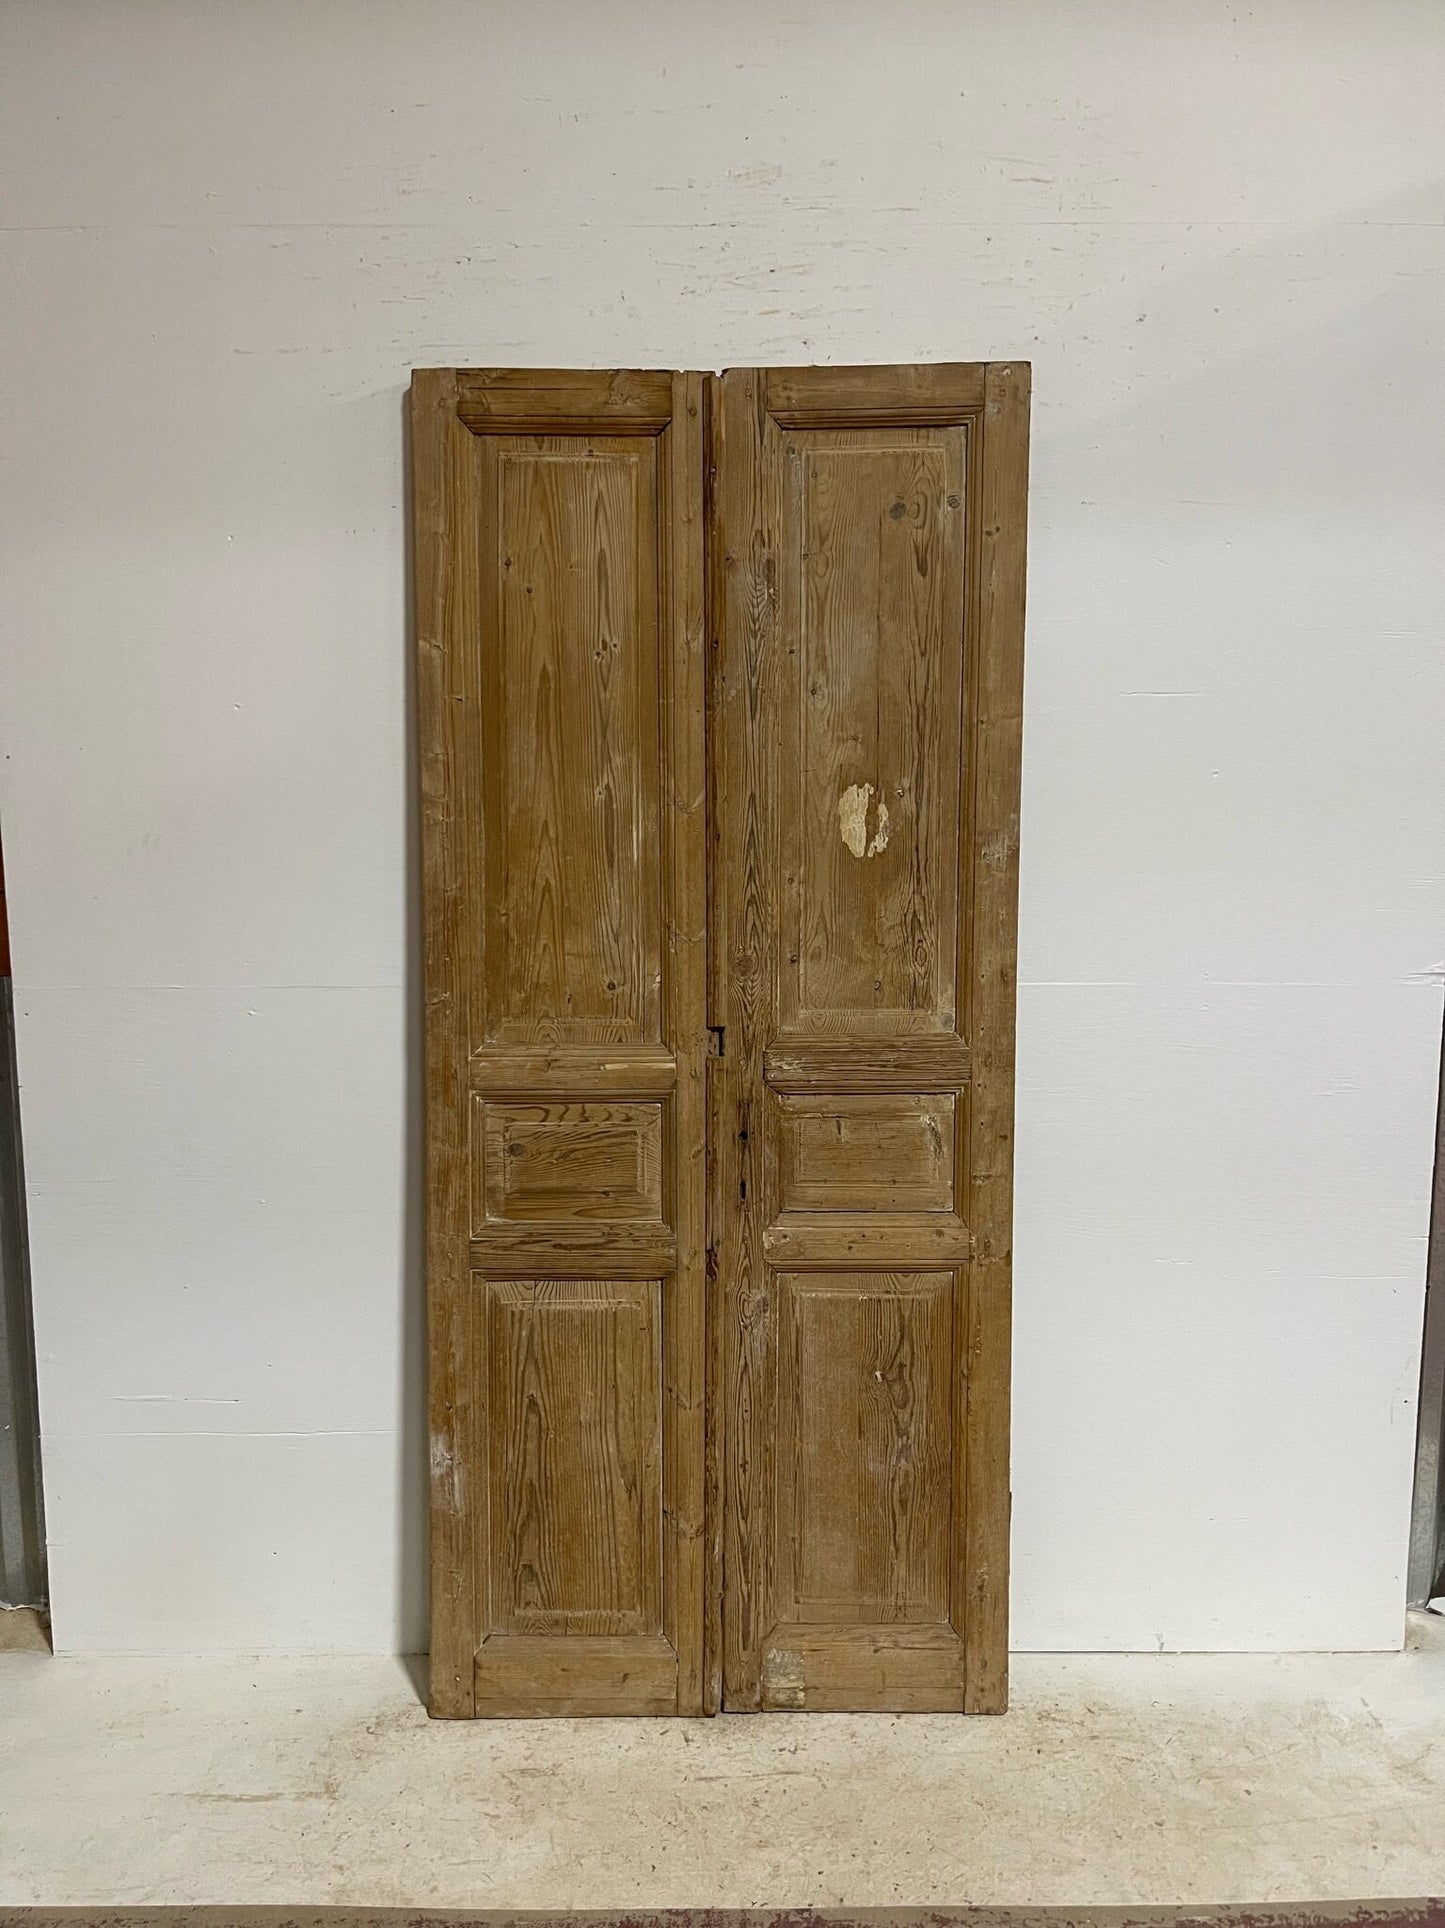 Antique French doors (87X38.25) G0020